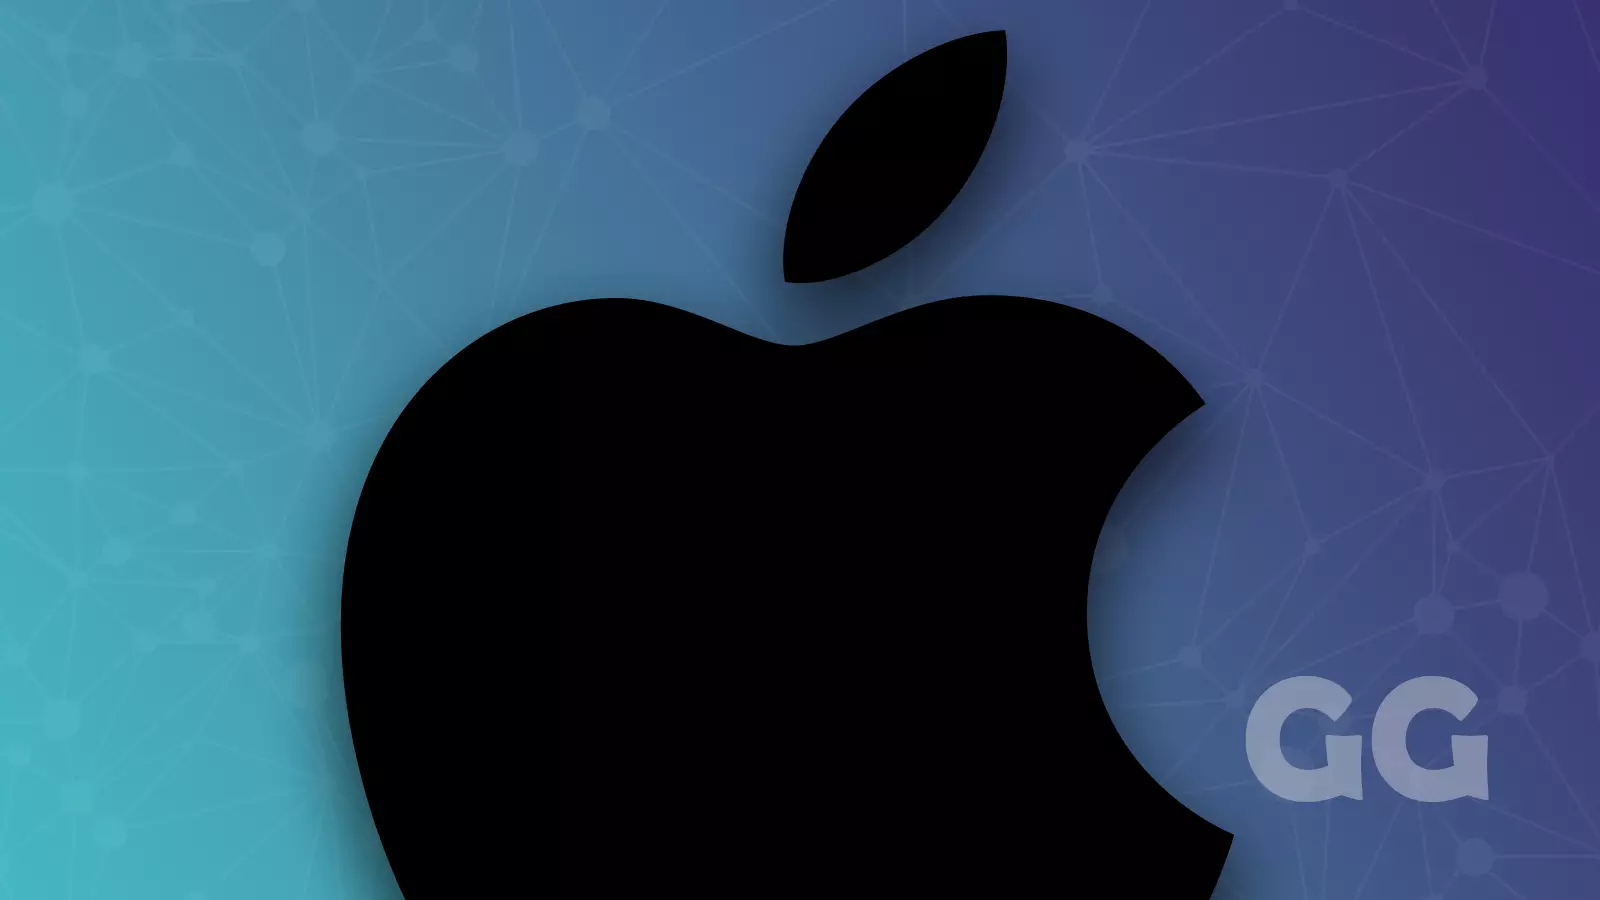 apple logo in black on blue background